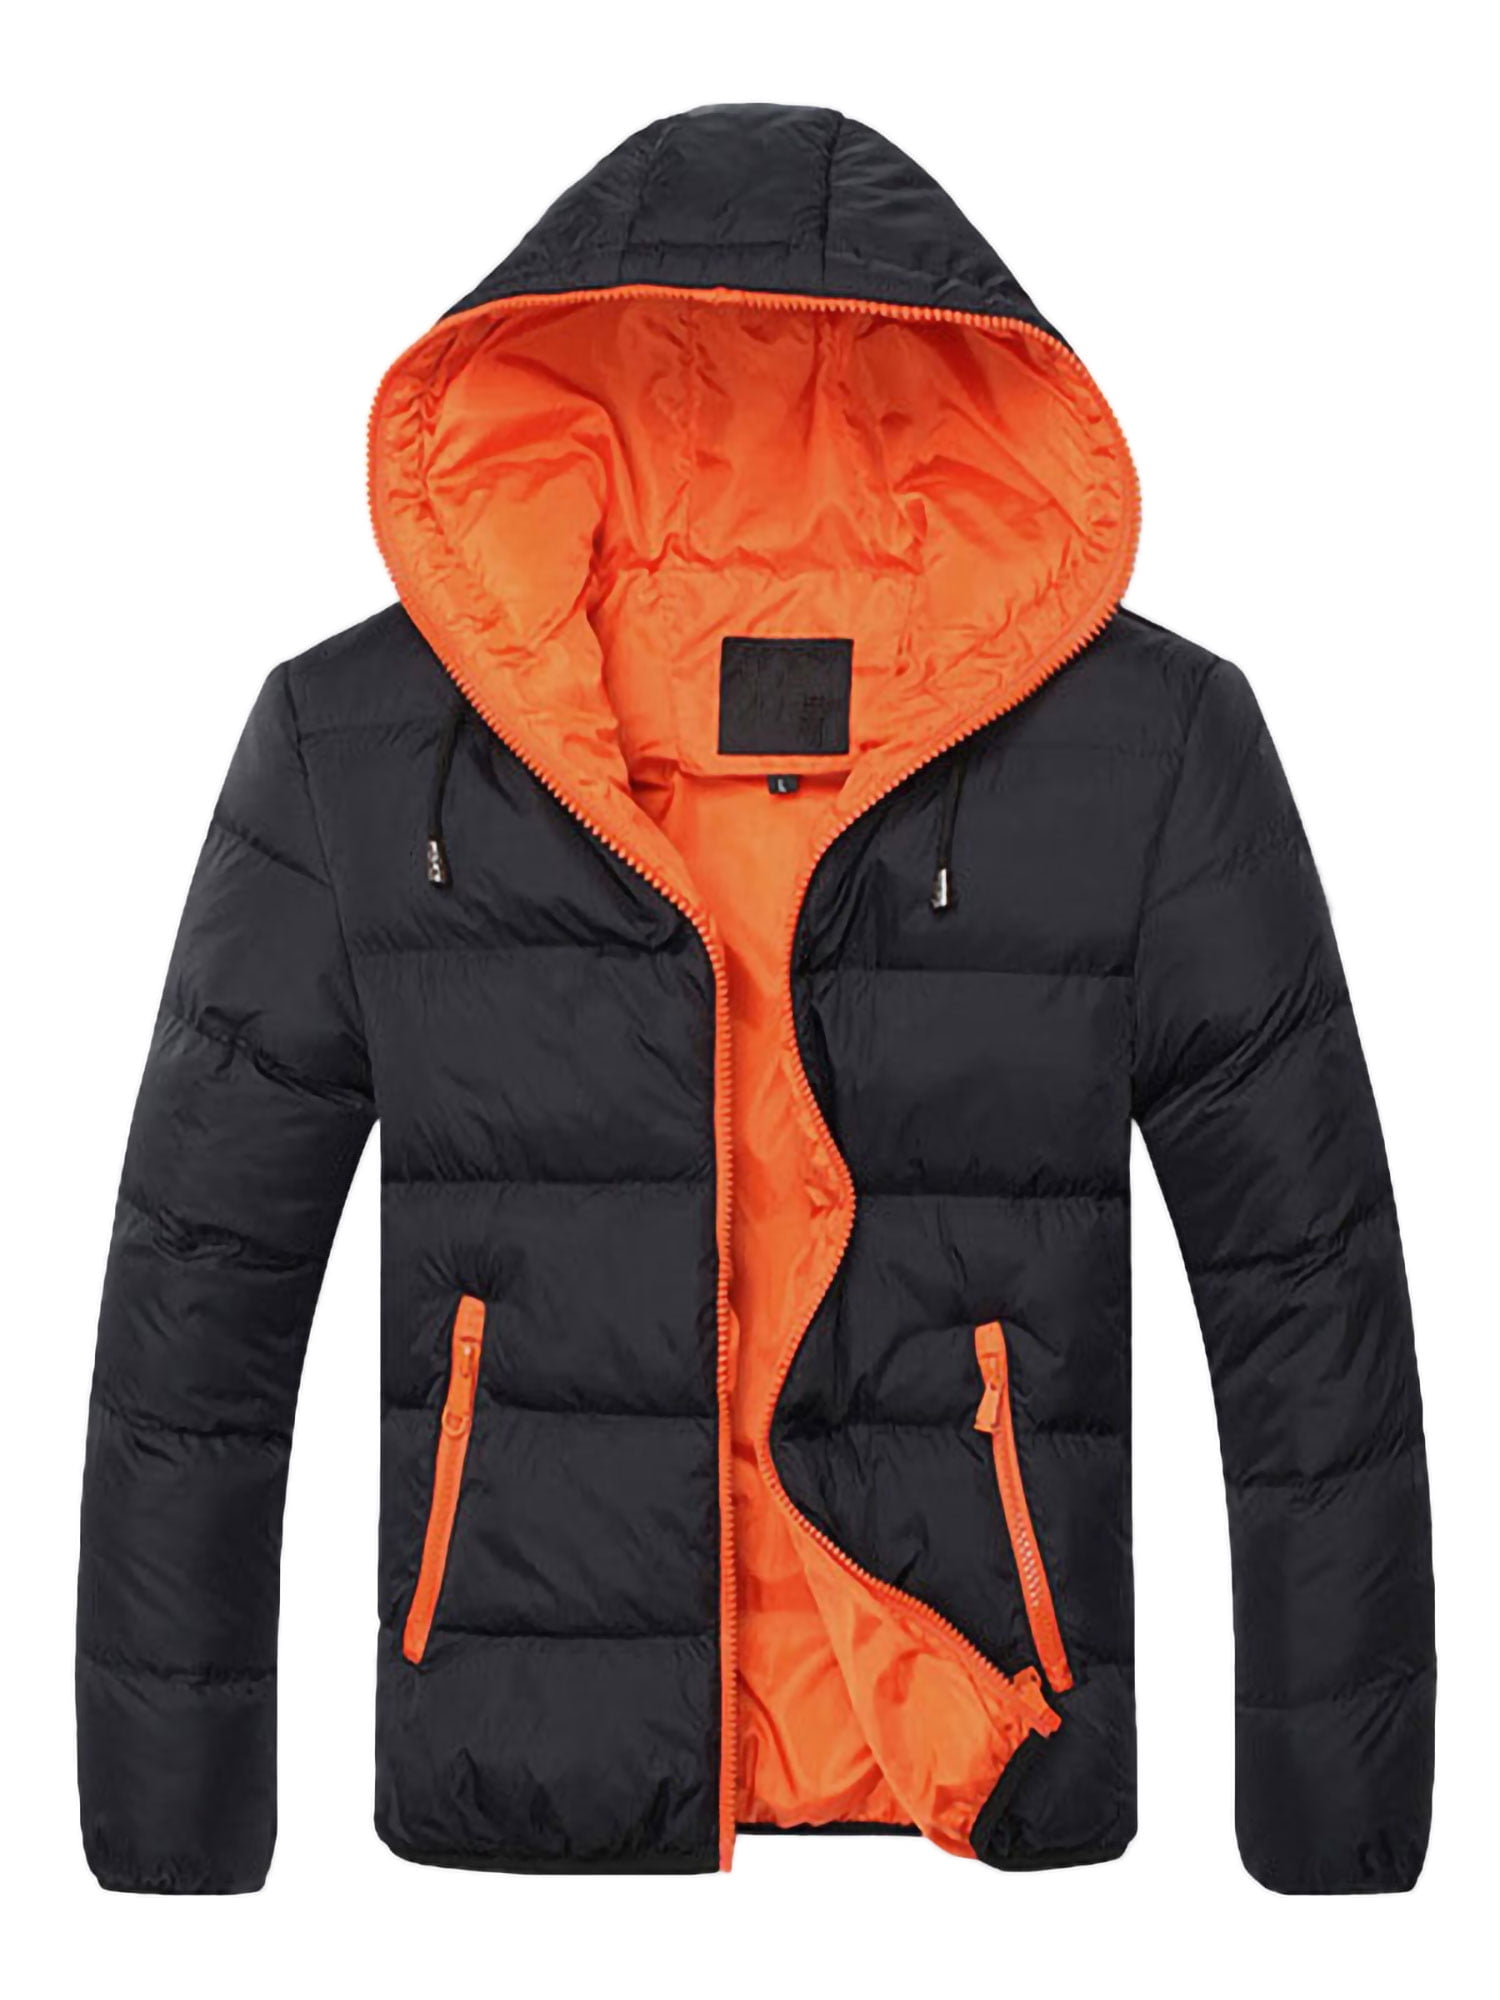 REASON Black Orange Combat Fur Puffer Zip Up Winter Coat Jacket Small  Patches